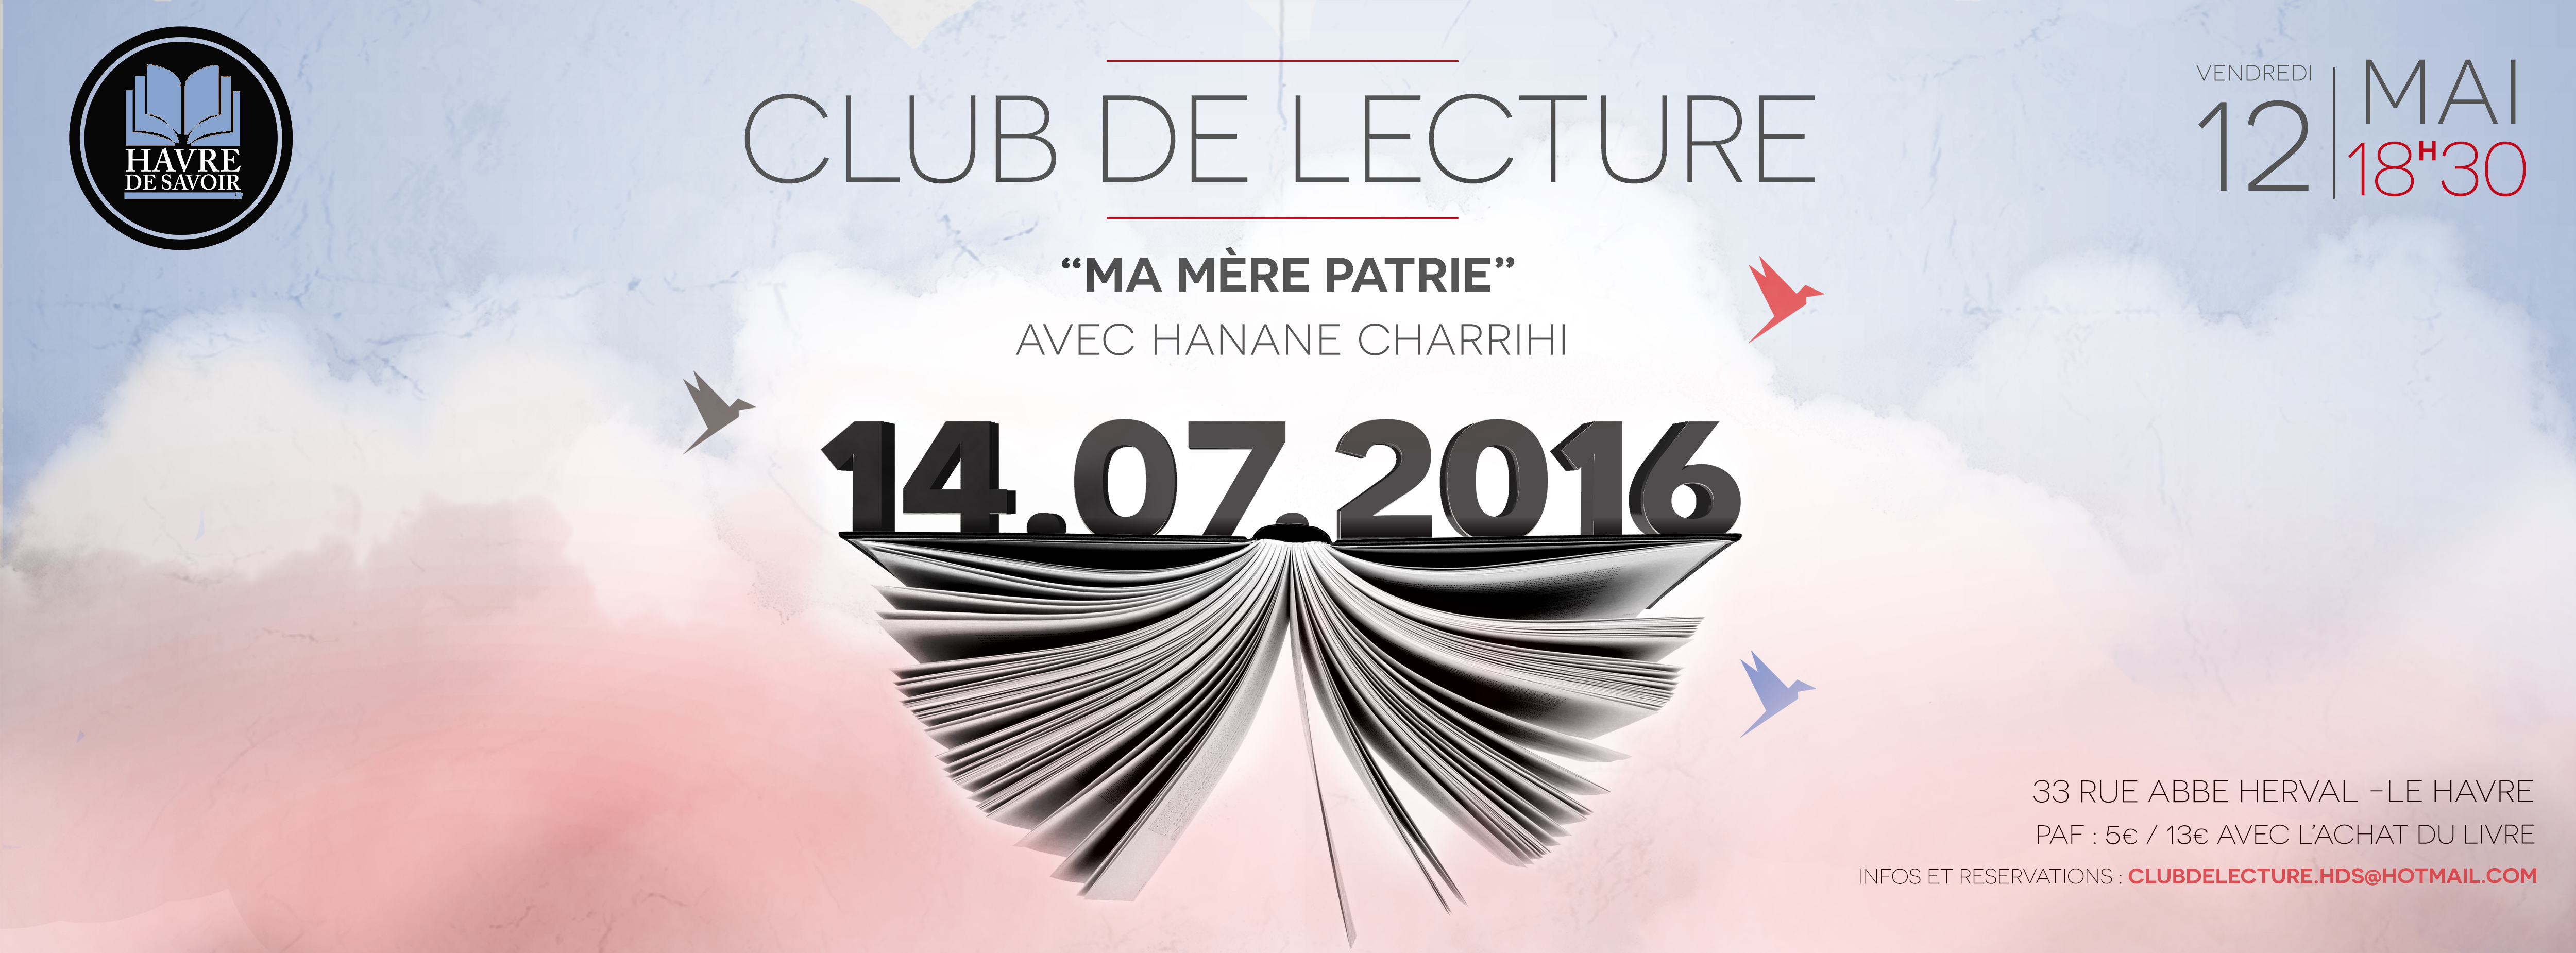 Club De Lecture avec Hanane Charrihi - Vendredi 12 Mai 2017